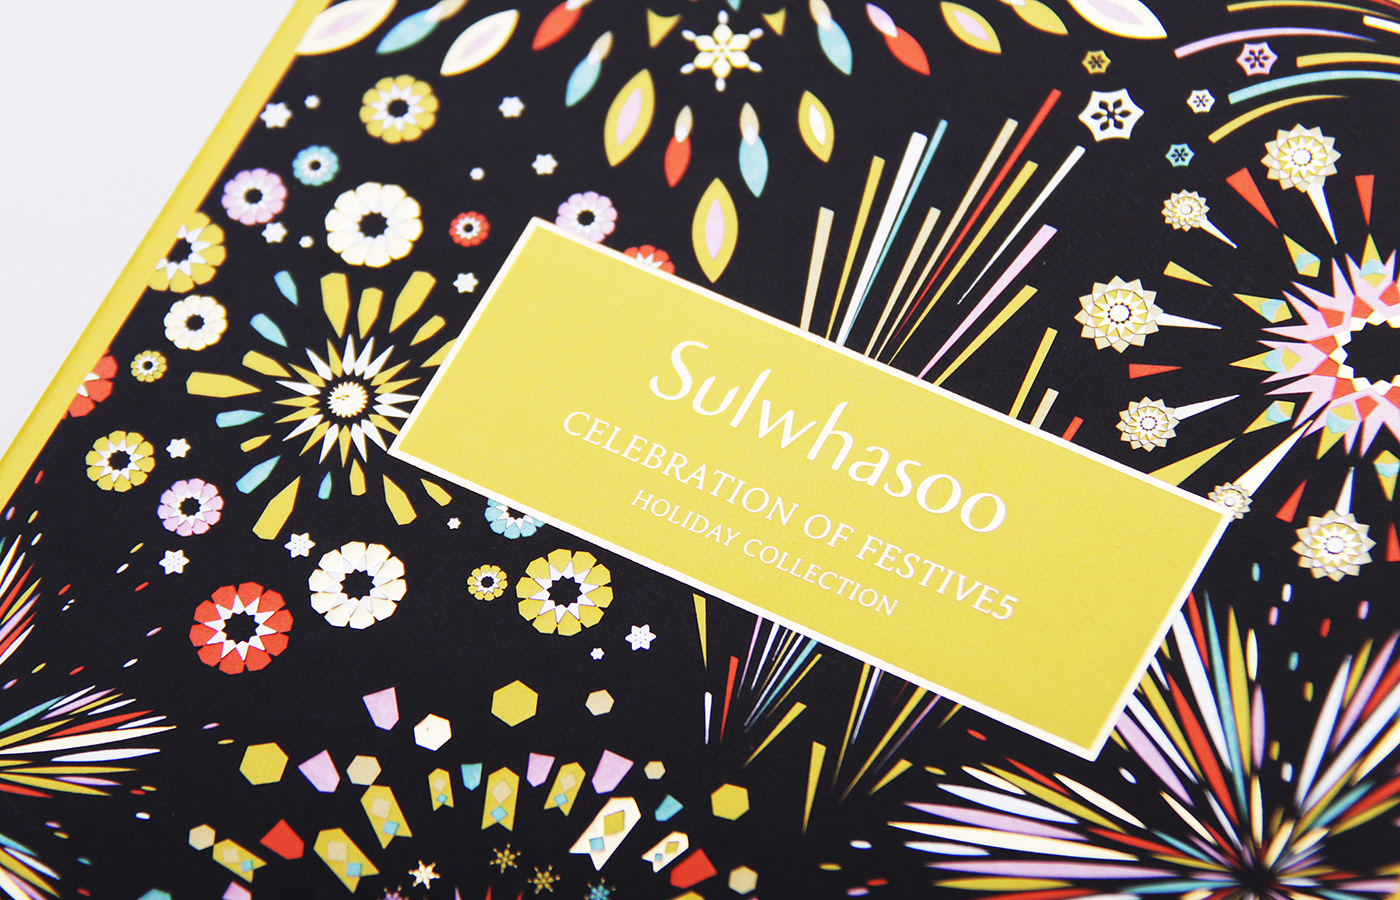 SULWHASOO cosmetics Korea craft luxury premium Printing festive